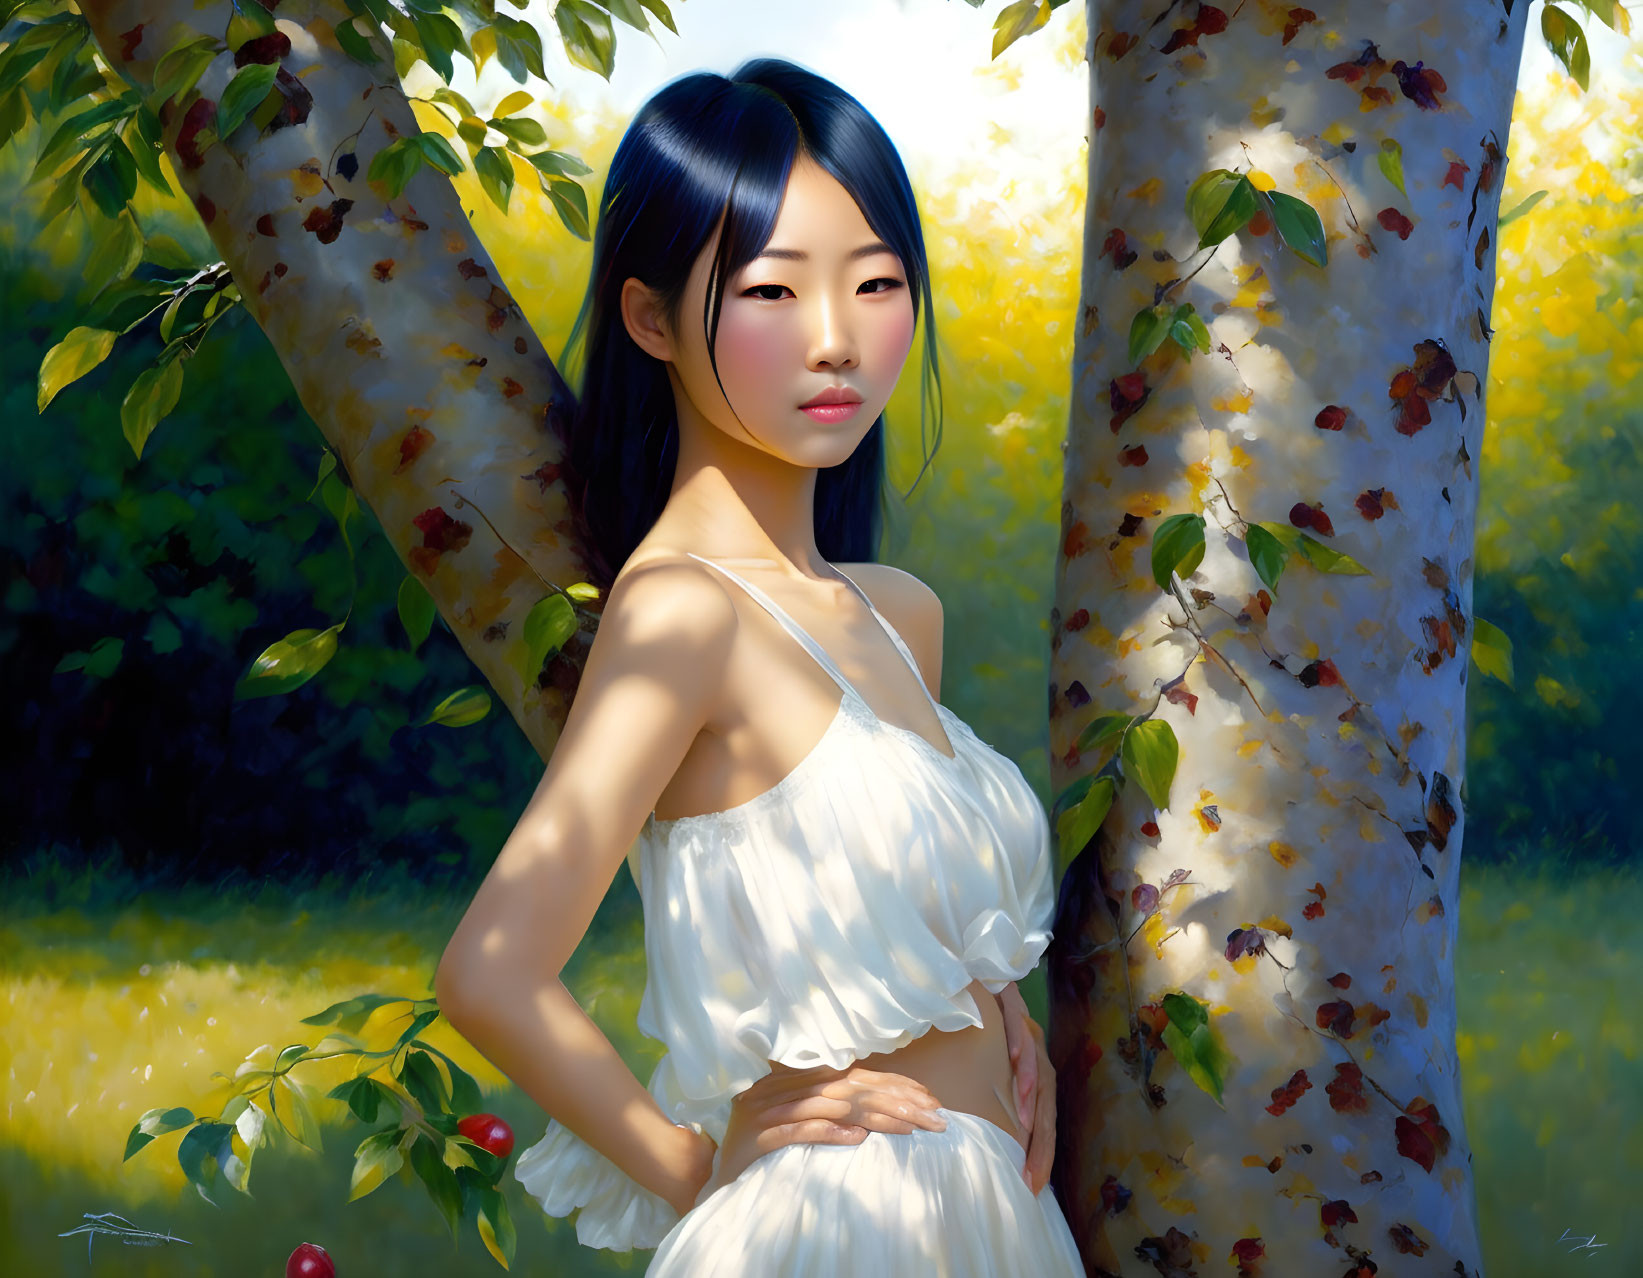 Woman in white dress between birch trees in sunlit grove